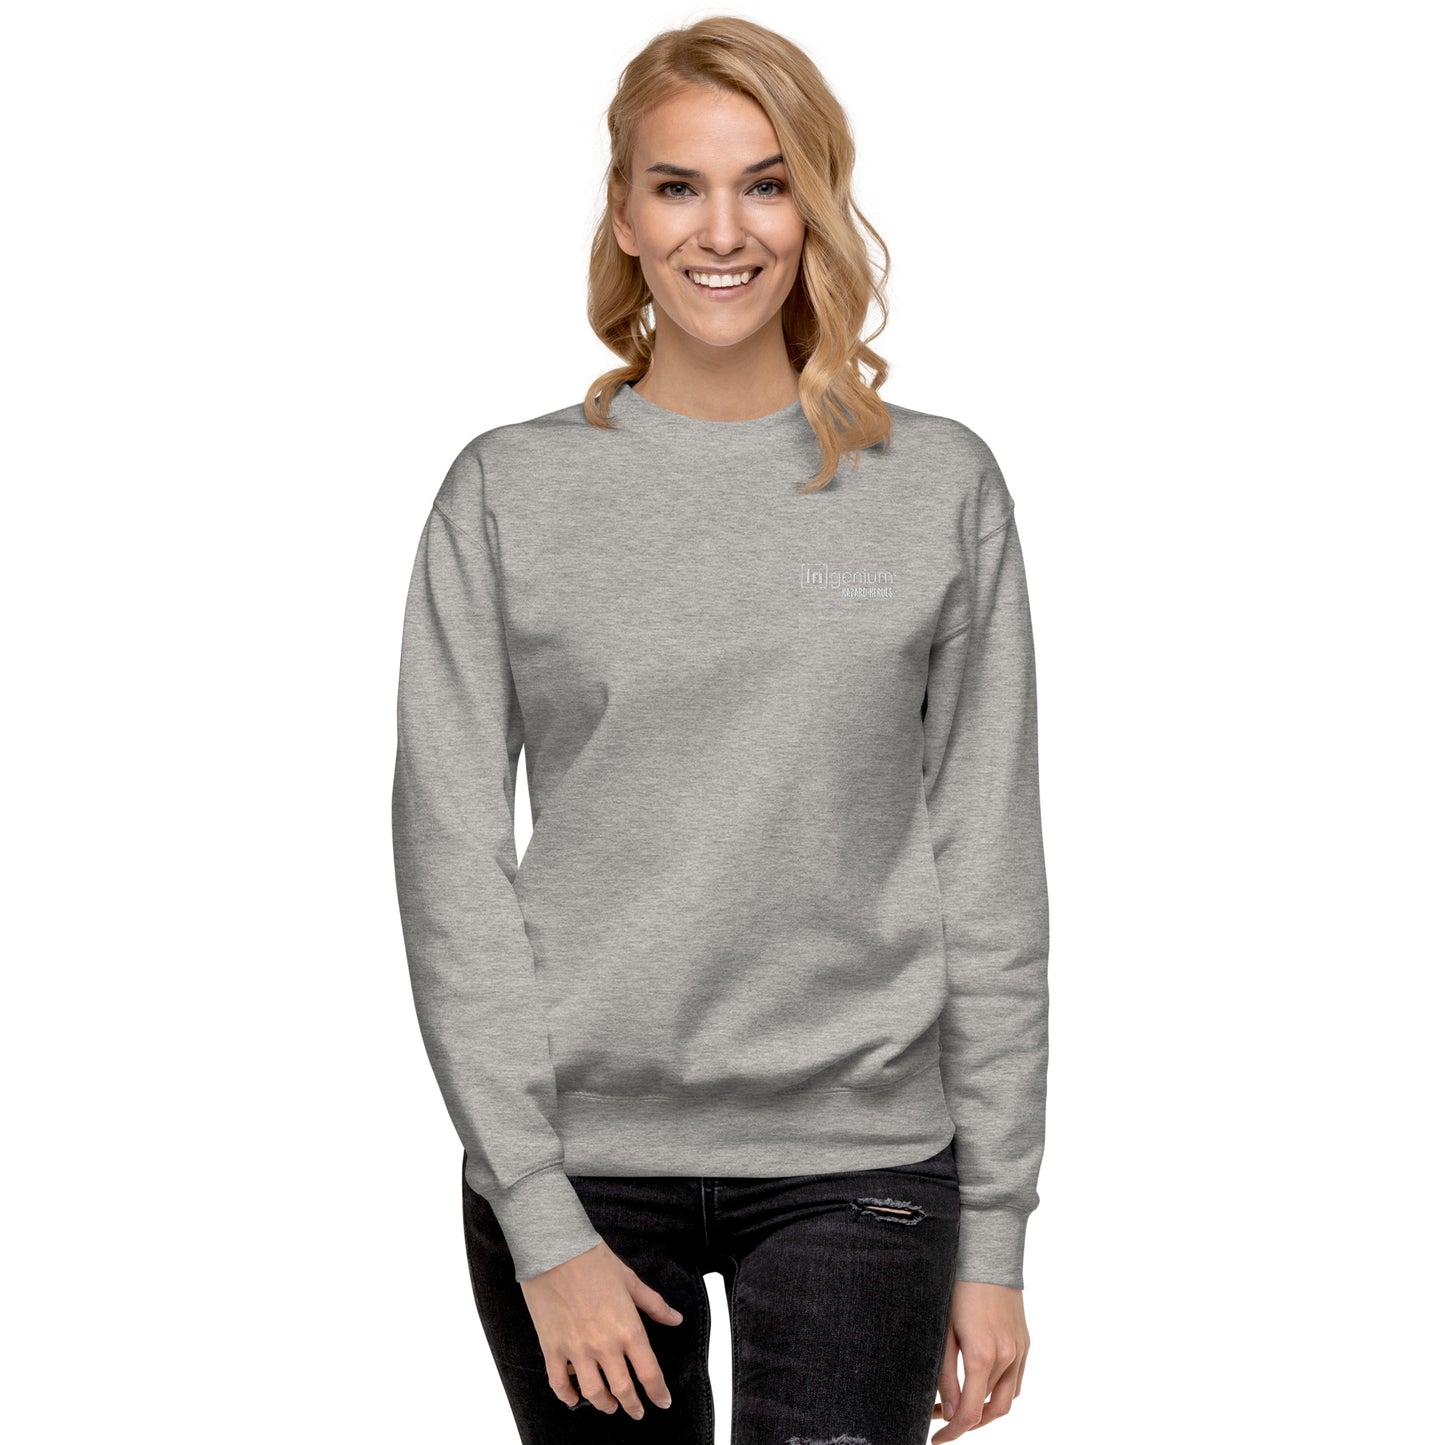 Embroidered Unisex Premium Sweatshirt (fitted cut)